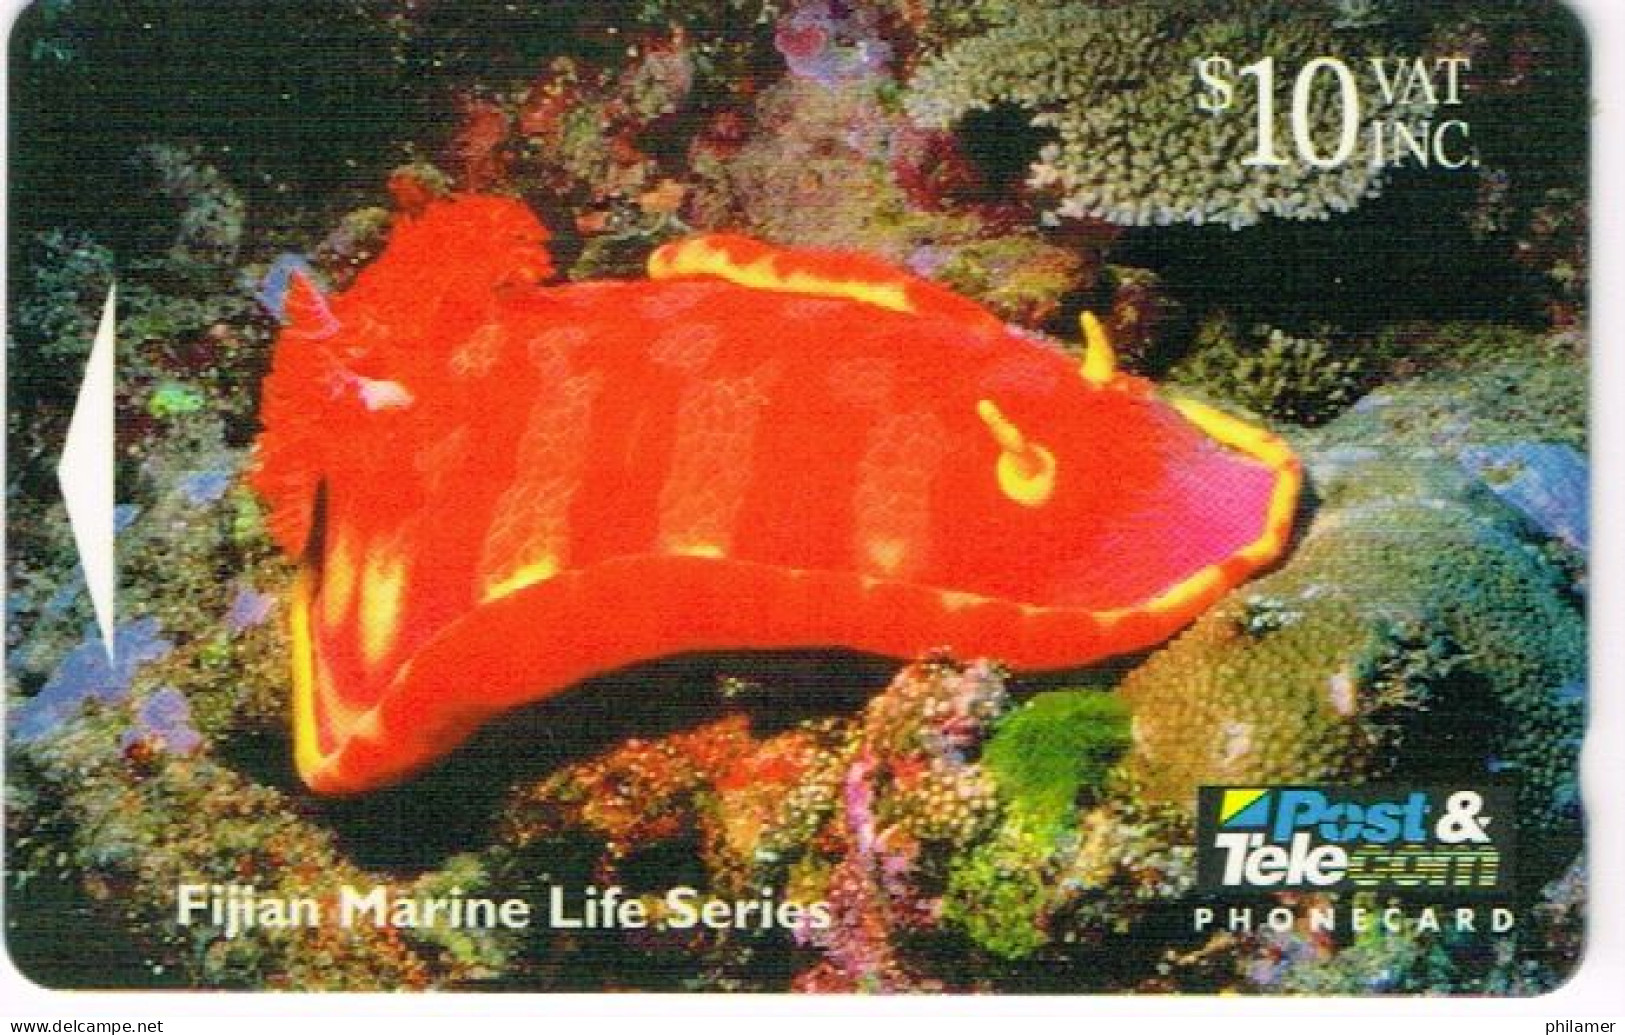 Fidji Fiji TELECARTE PHONECARD Telecom Marine Serie Sea Slug Limace Mer Nudibranch Recif Reef 1995 2 Dollars Ut BE - Fiji